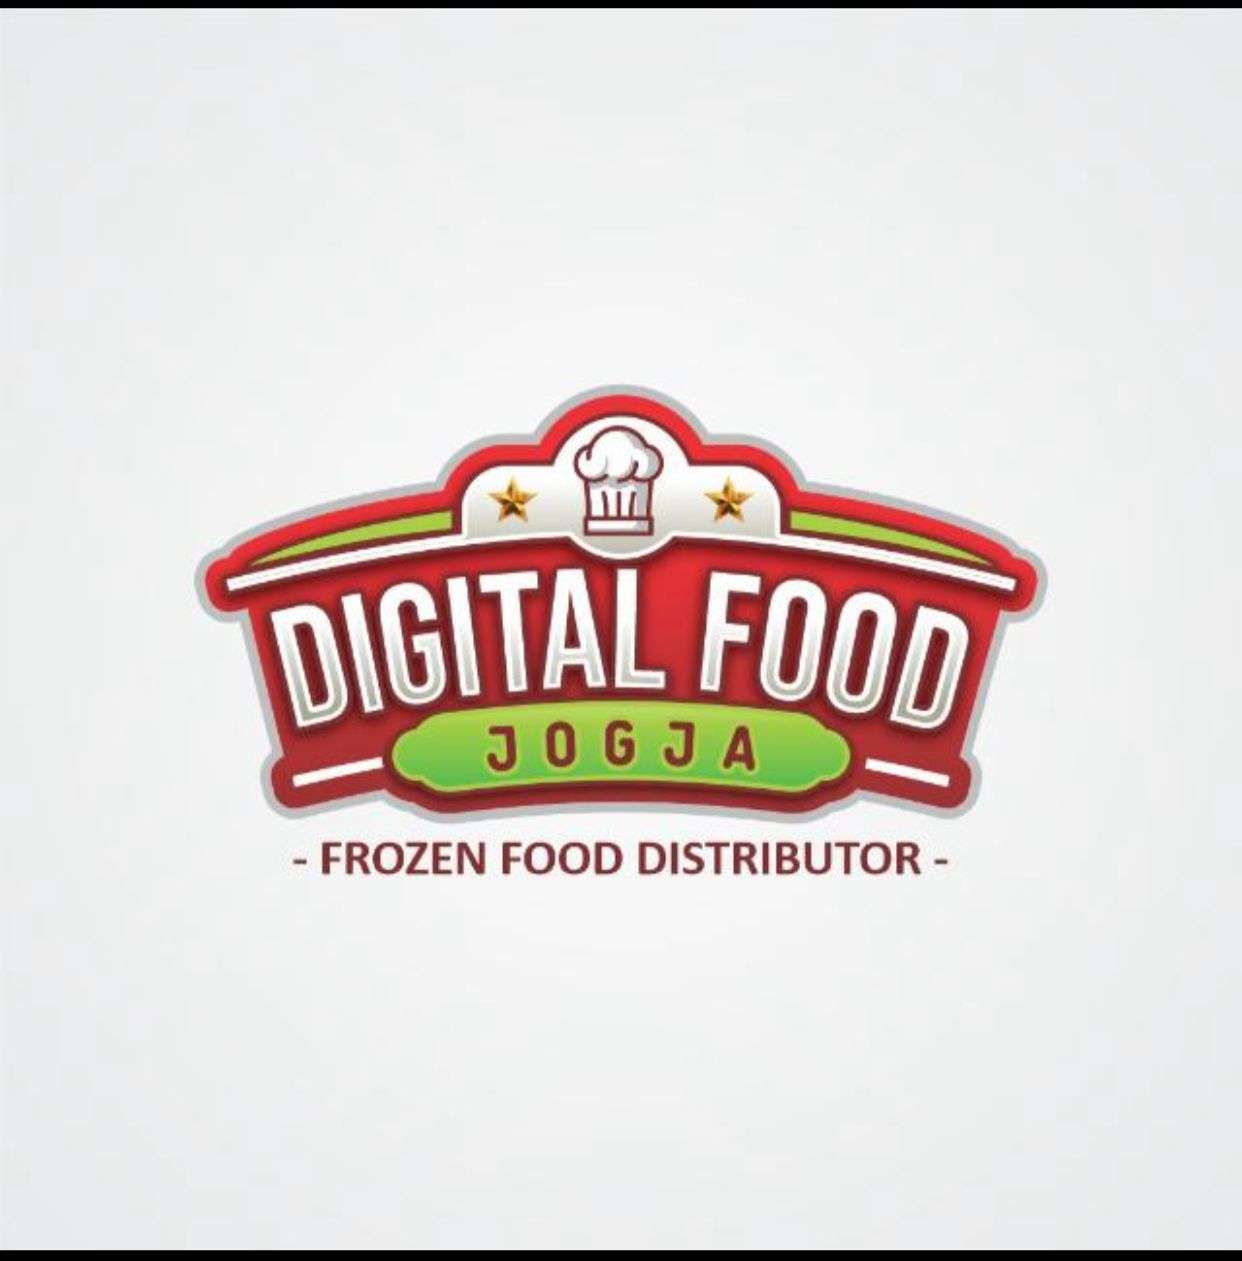 Digital Food Jogja